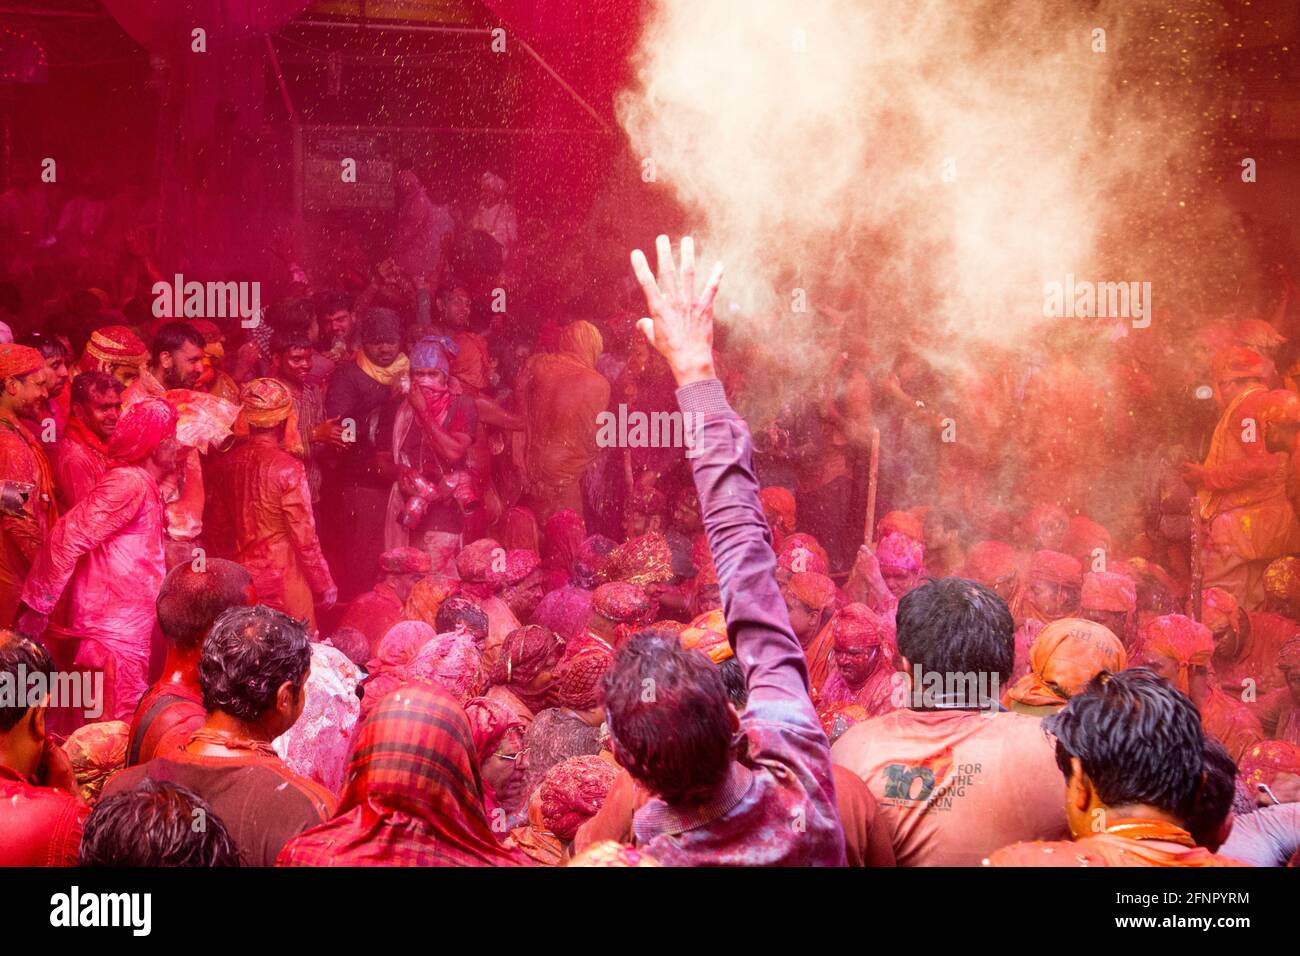 Lathmar Holi Barsana Nandgaon Vrindavan Festivals of Colours across India Stock Photo